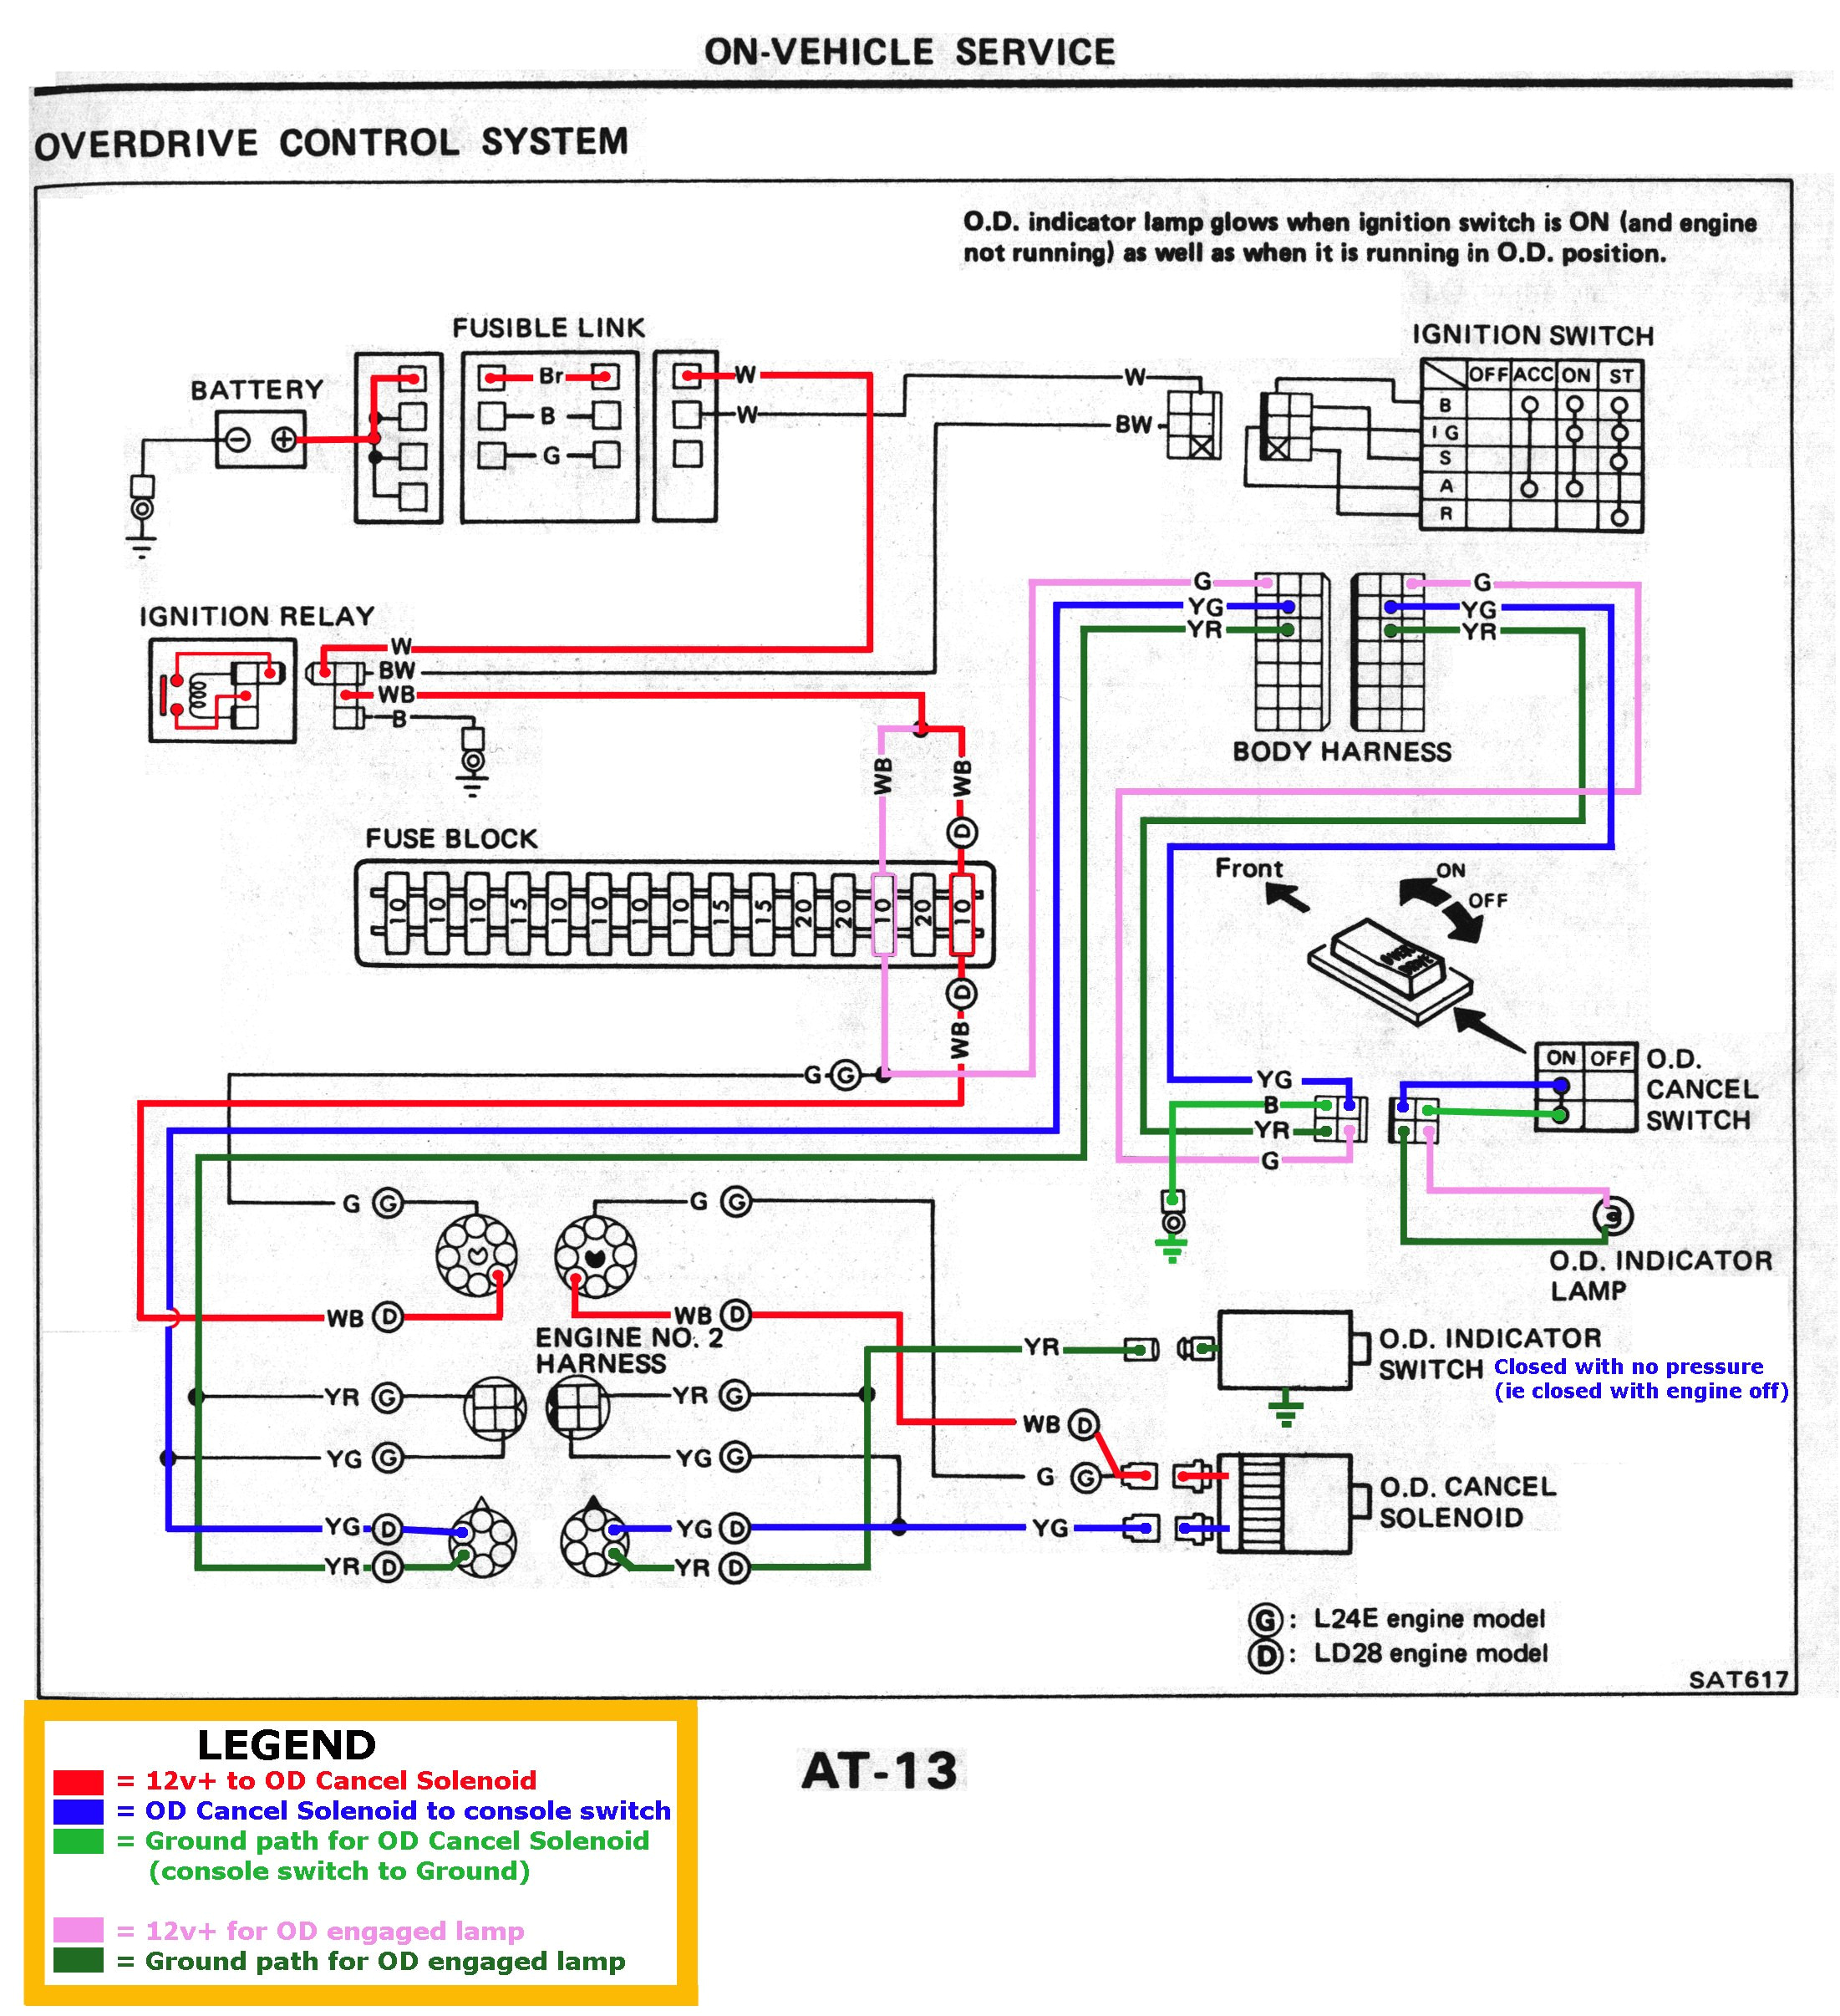 gratia car audio wiring wiring diagram files gratia car audio wiring